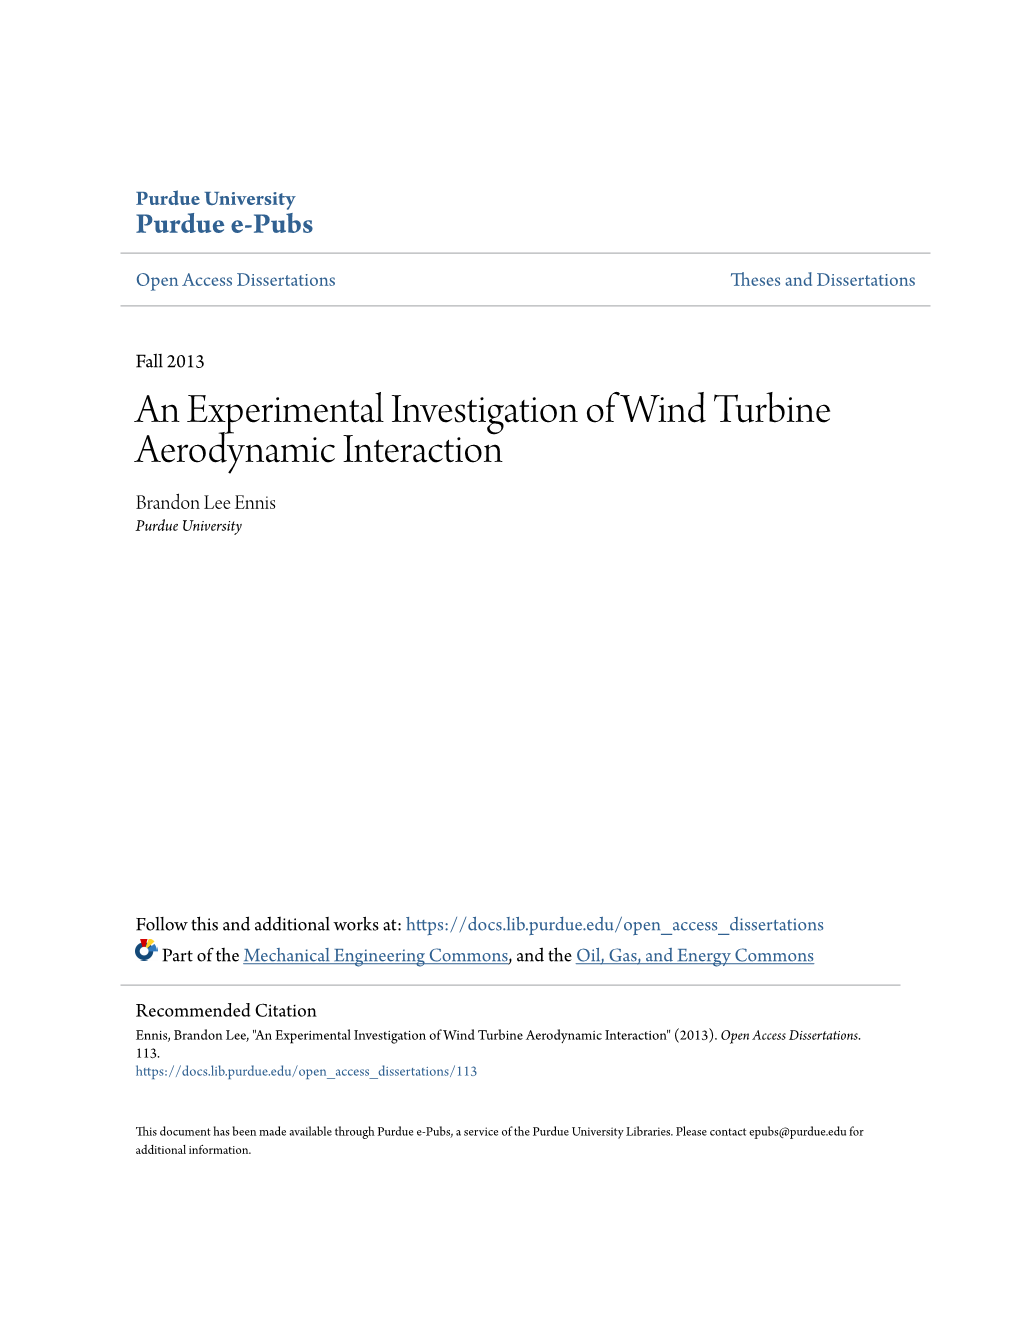 An Experimental Investigation of Wind Turbine Aerodynamic Interaction Brandon Lee Ennis Purdue University